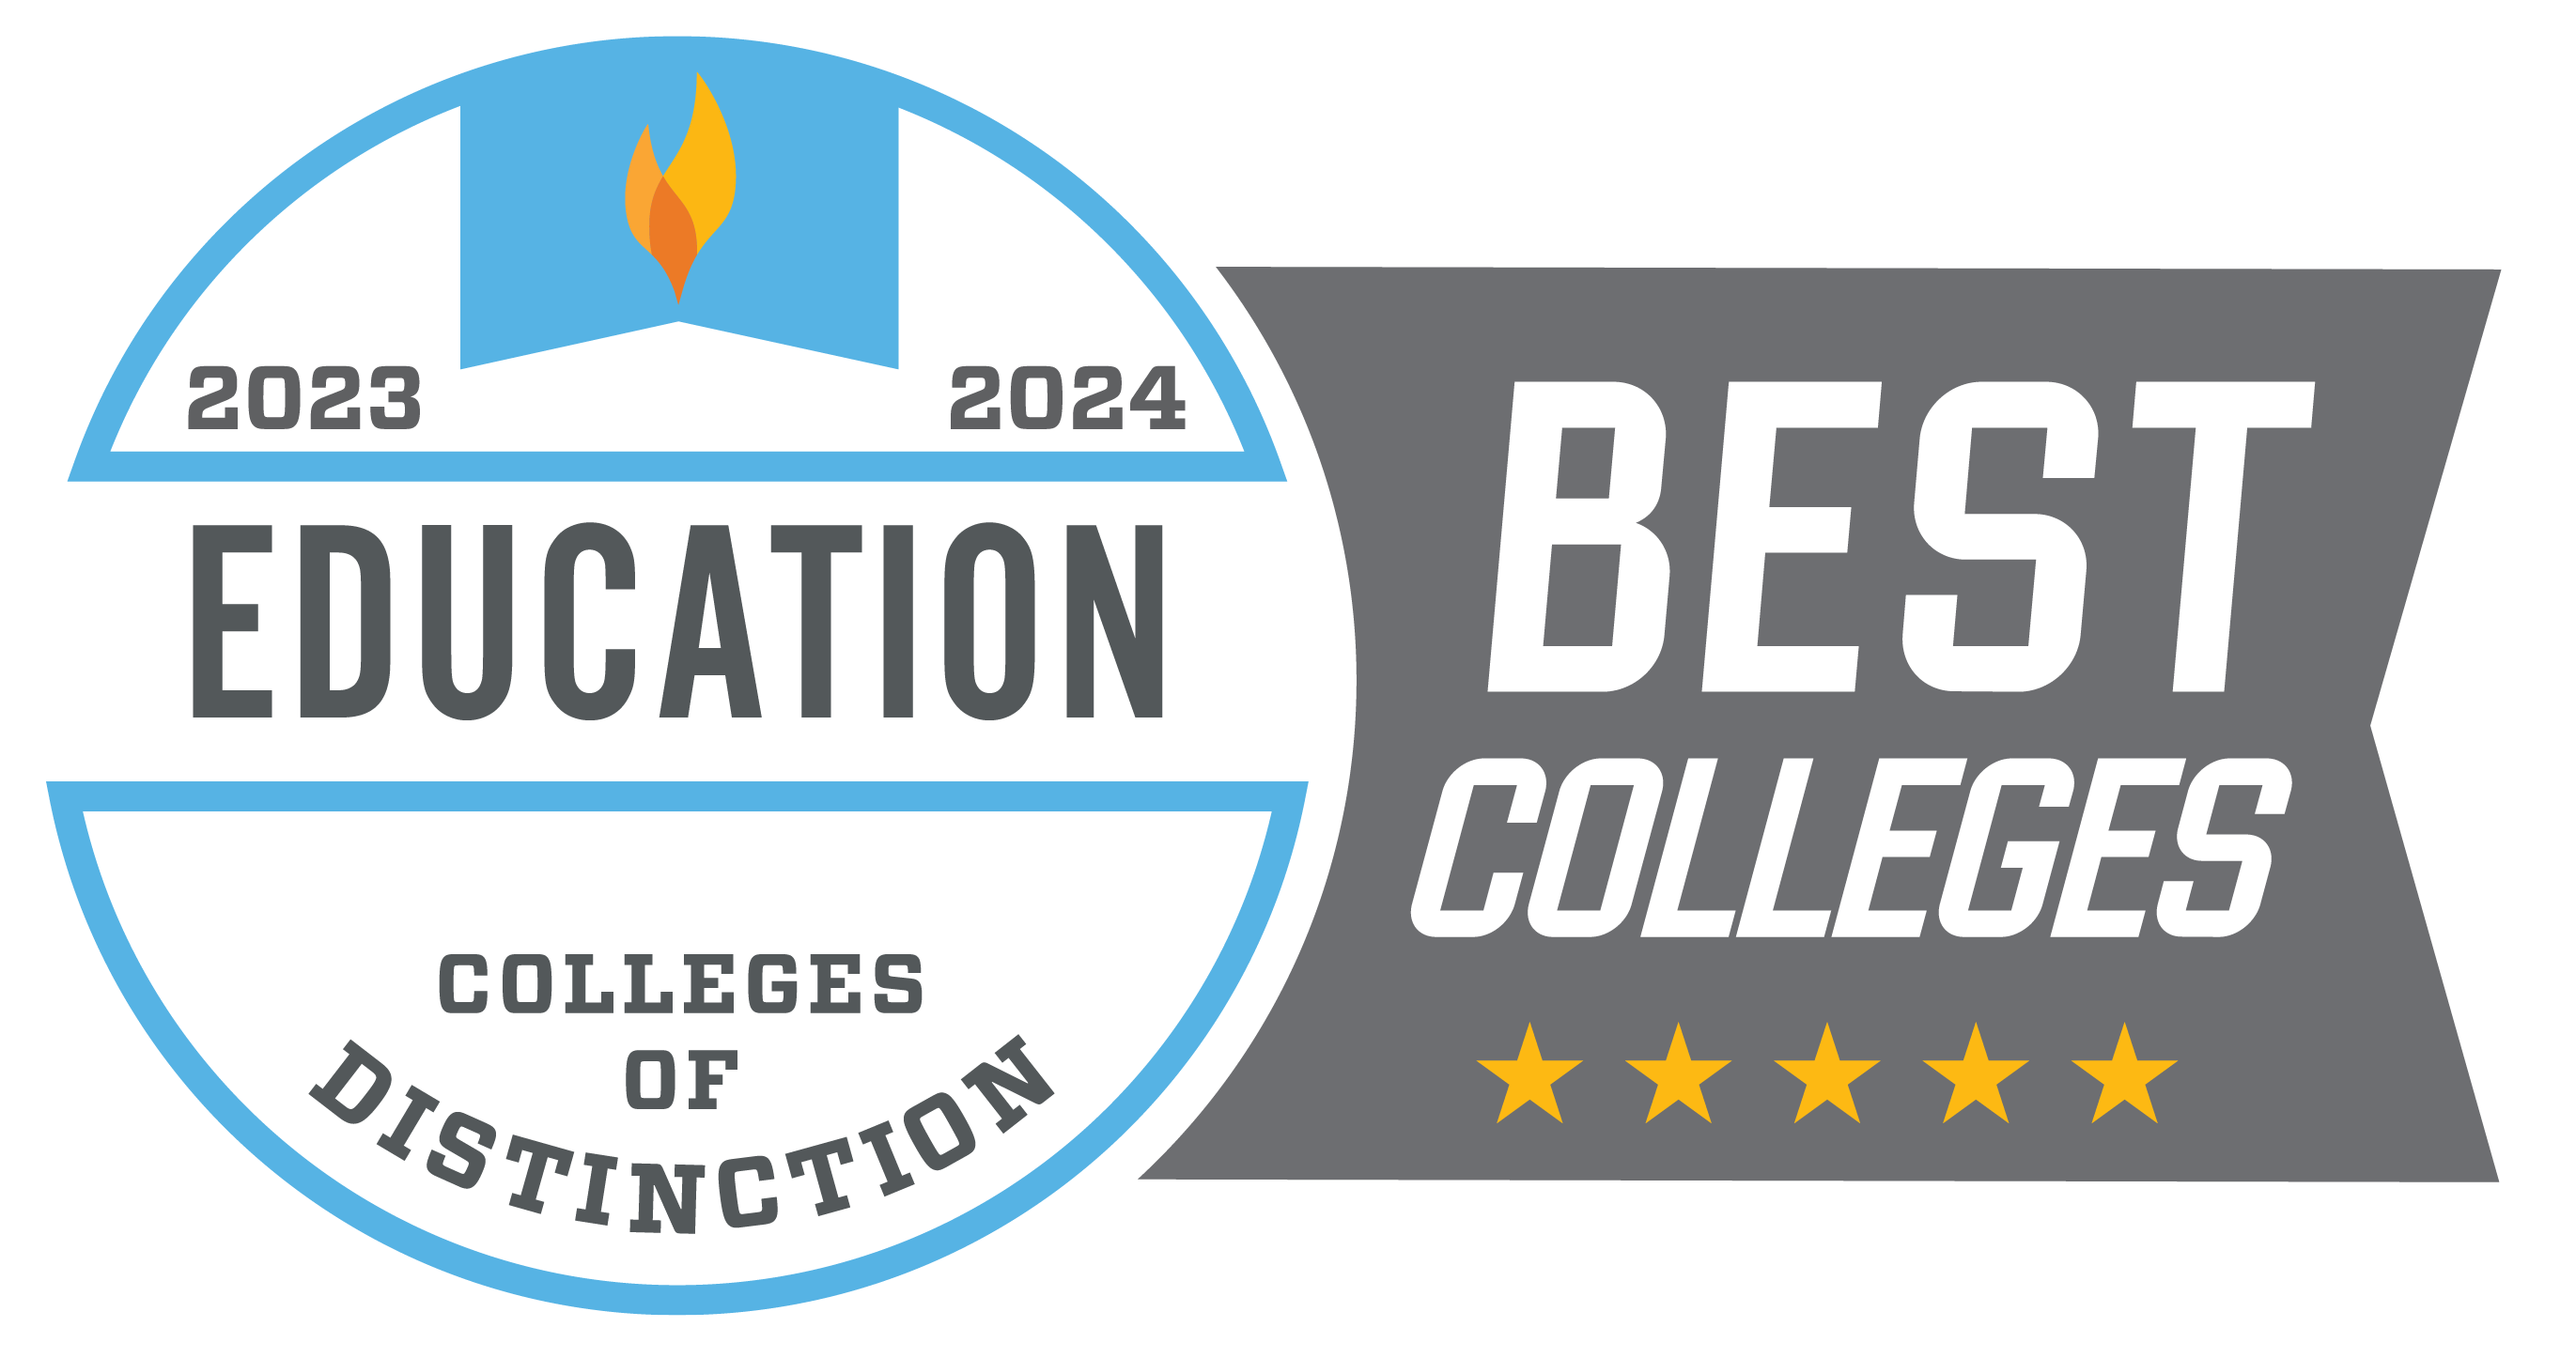 College of Distinction: Education badge